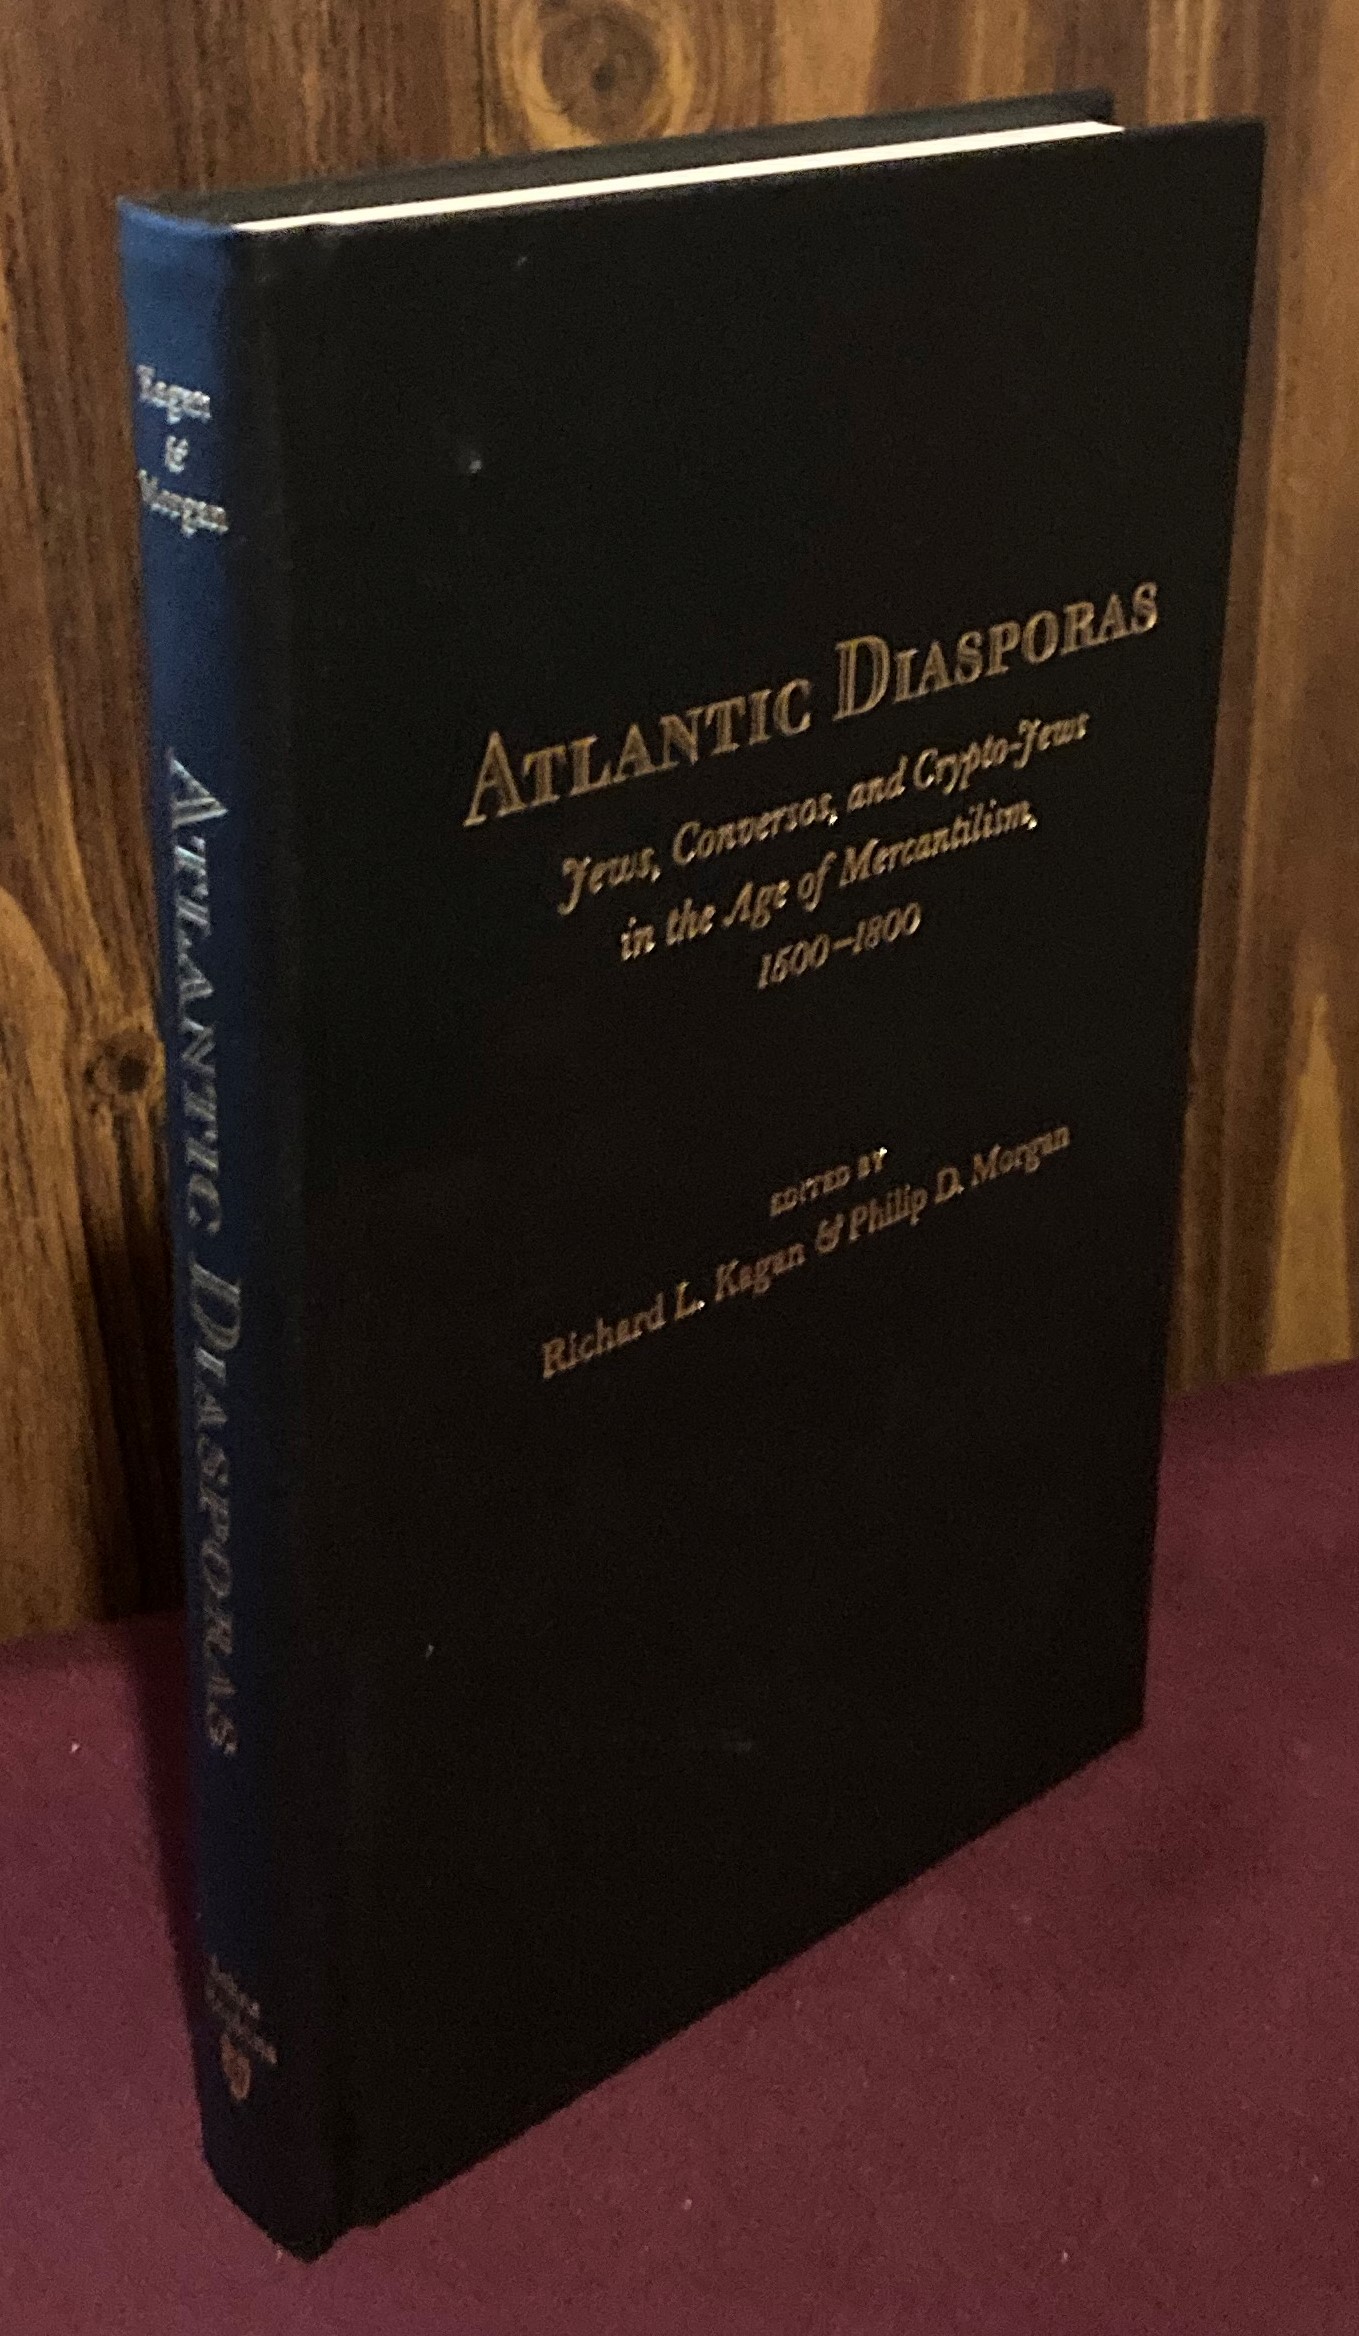 Atlantic Diasporas: Jews, Conversos, and Crypto-Jews in the Age of Mercantilism, 1500?1800 - Richard L. Kagan, Philip D. Morgan (Editors)